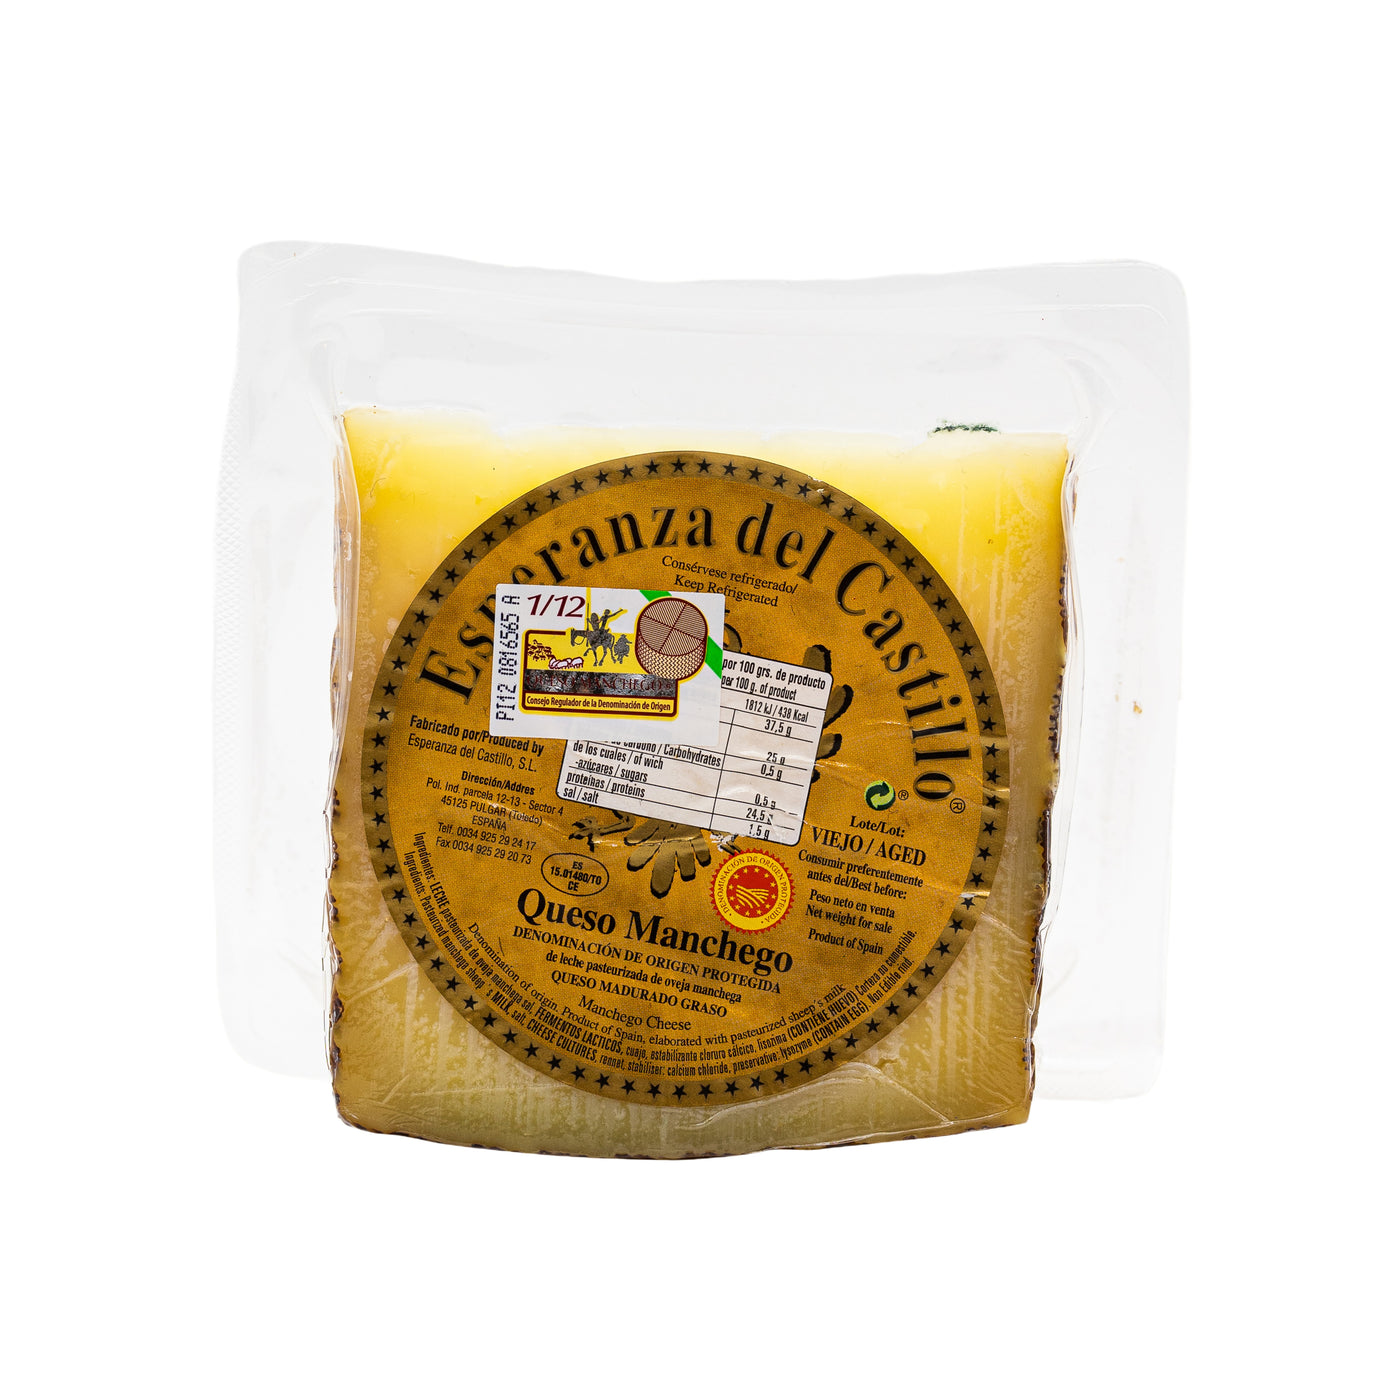 Aged Manchego Cheese Esperanza Del Castillo - wedge 250g